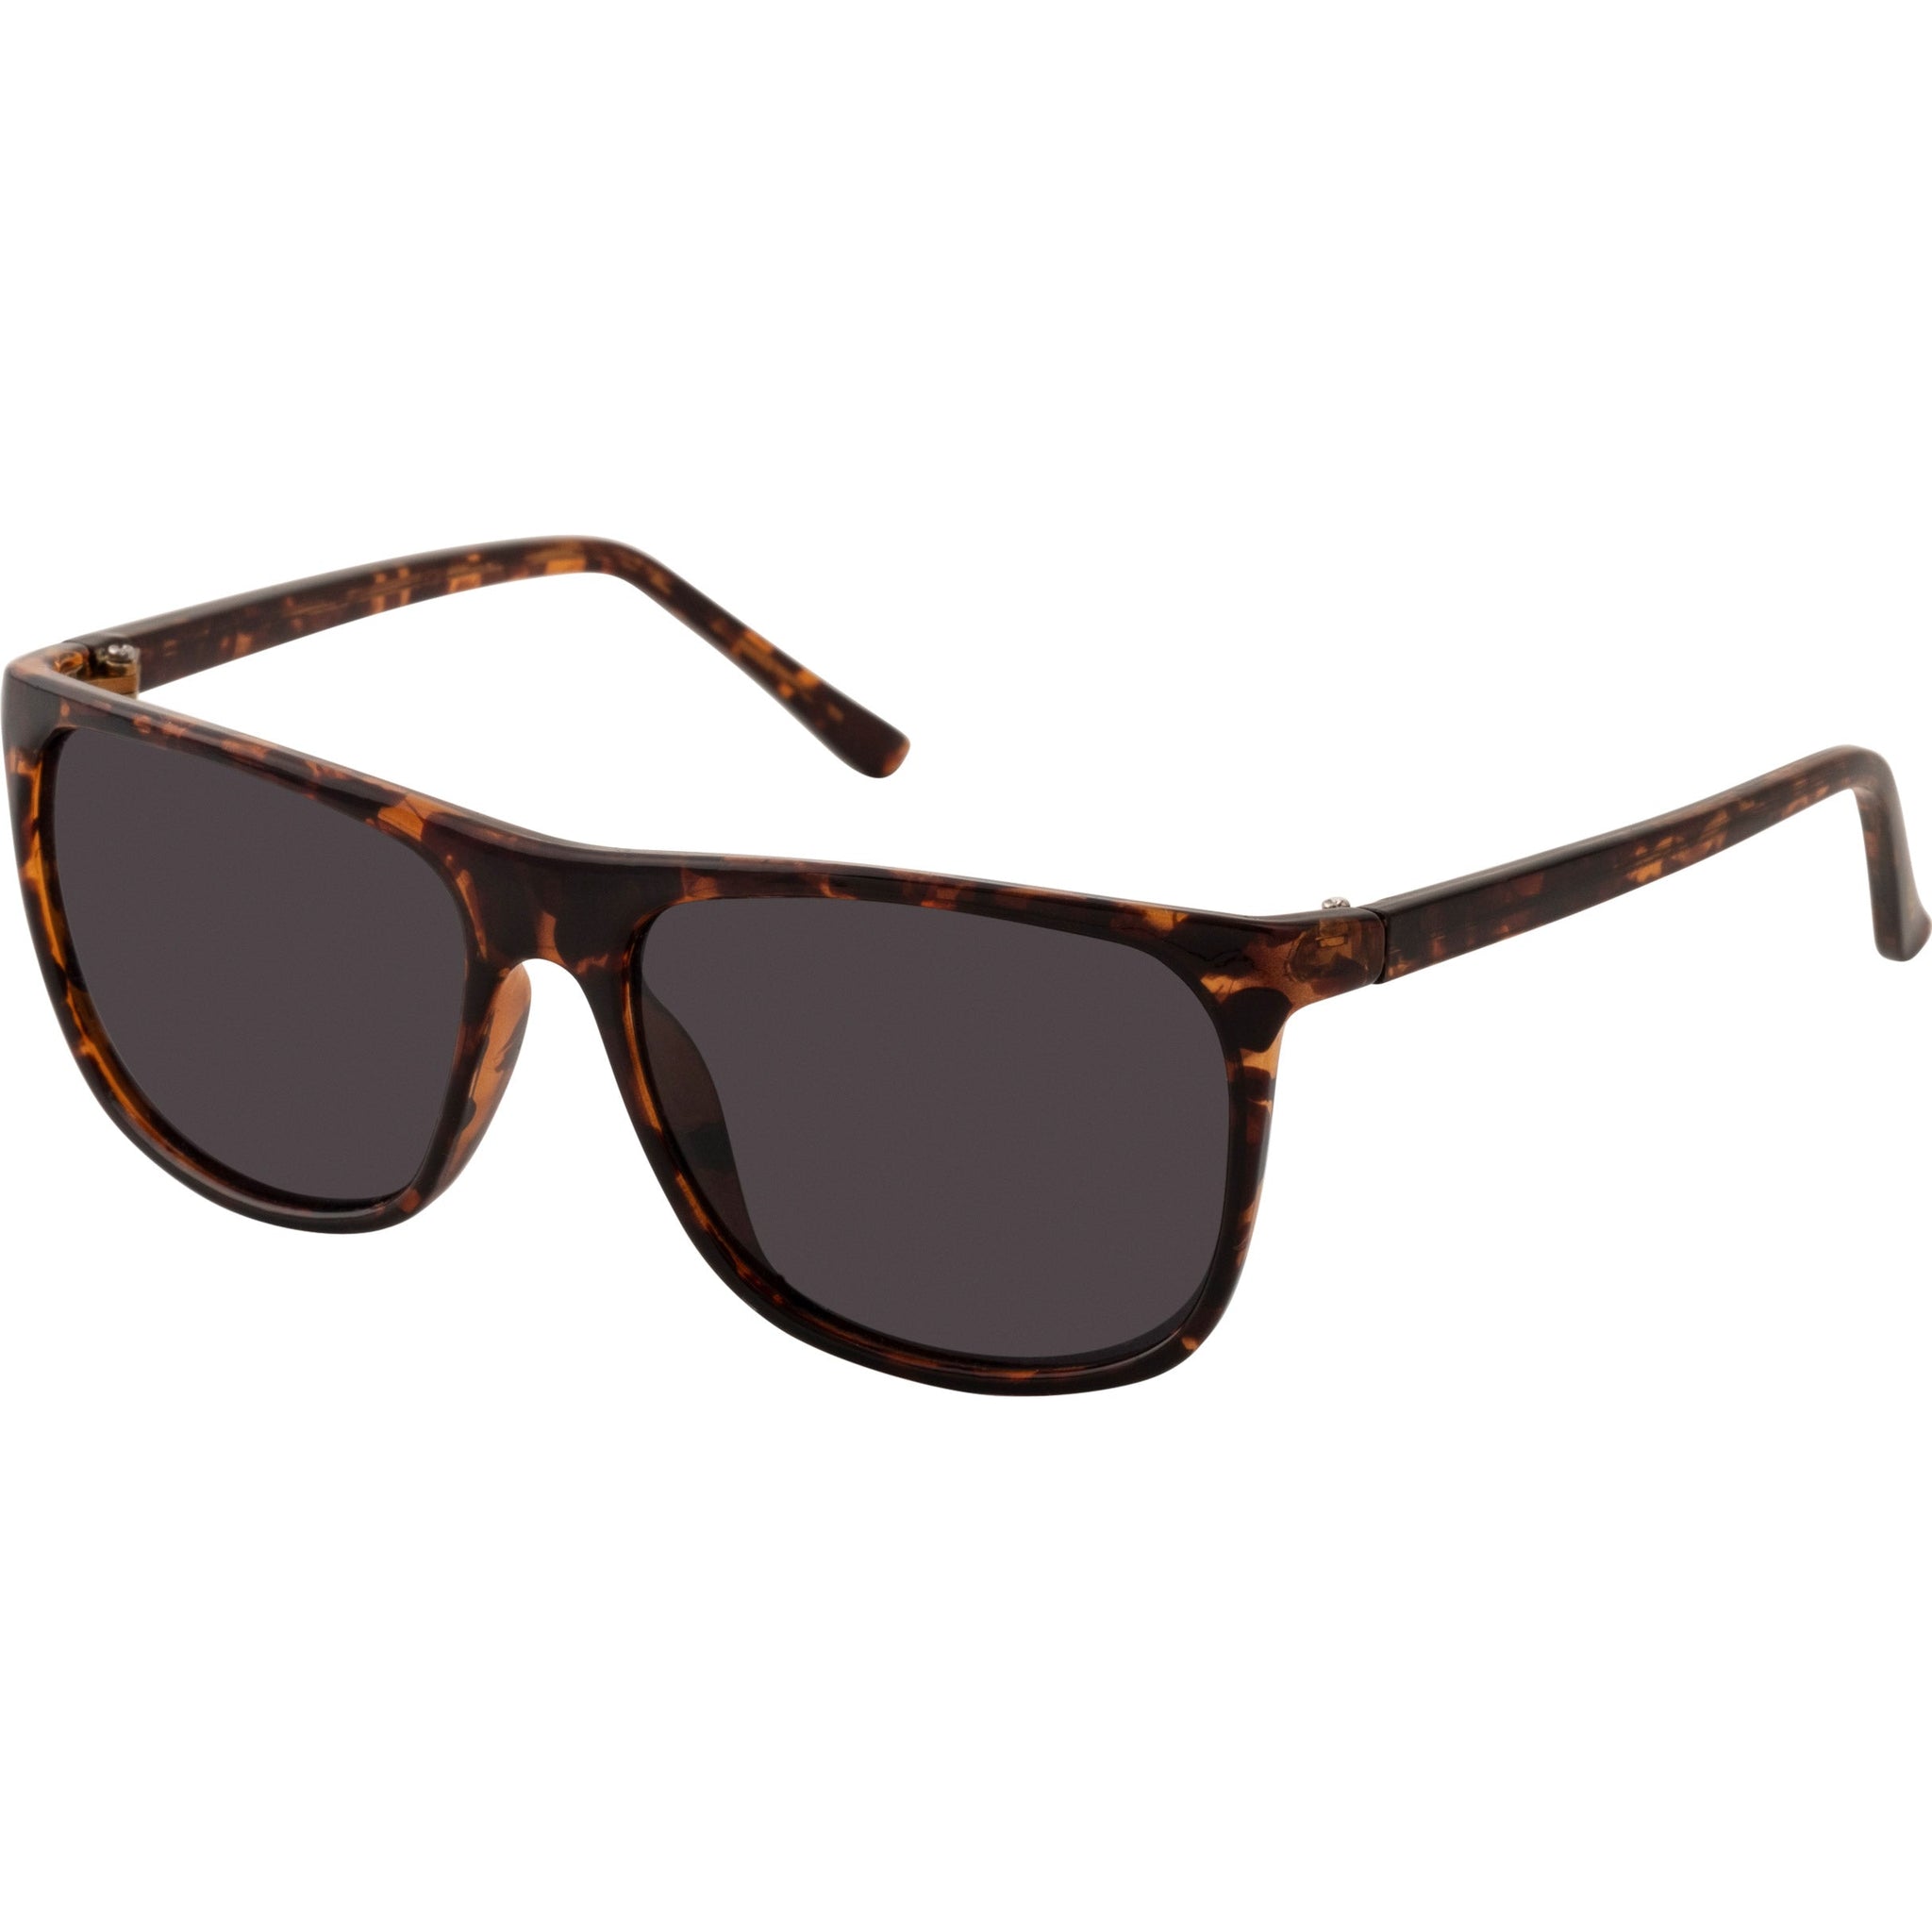 Kara Oversized Sunglasses - Brown Tortoise Colour - Pilgrim